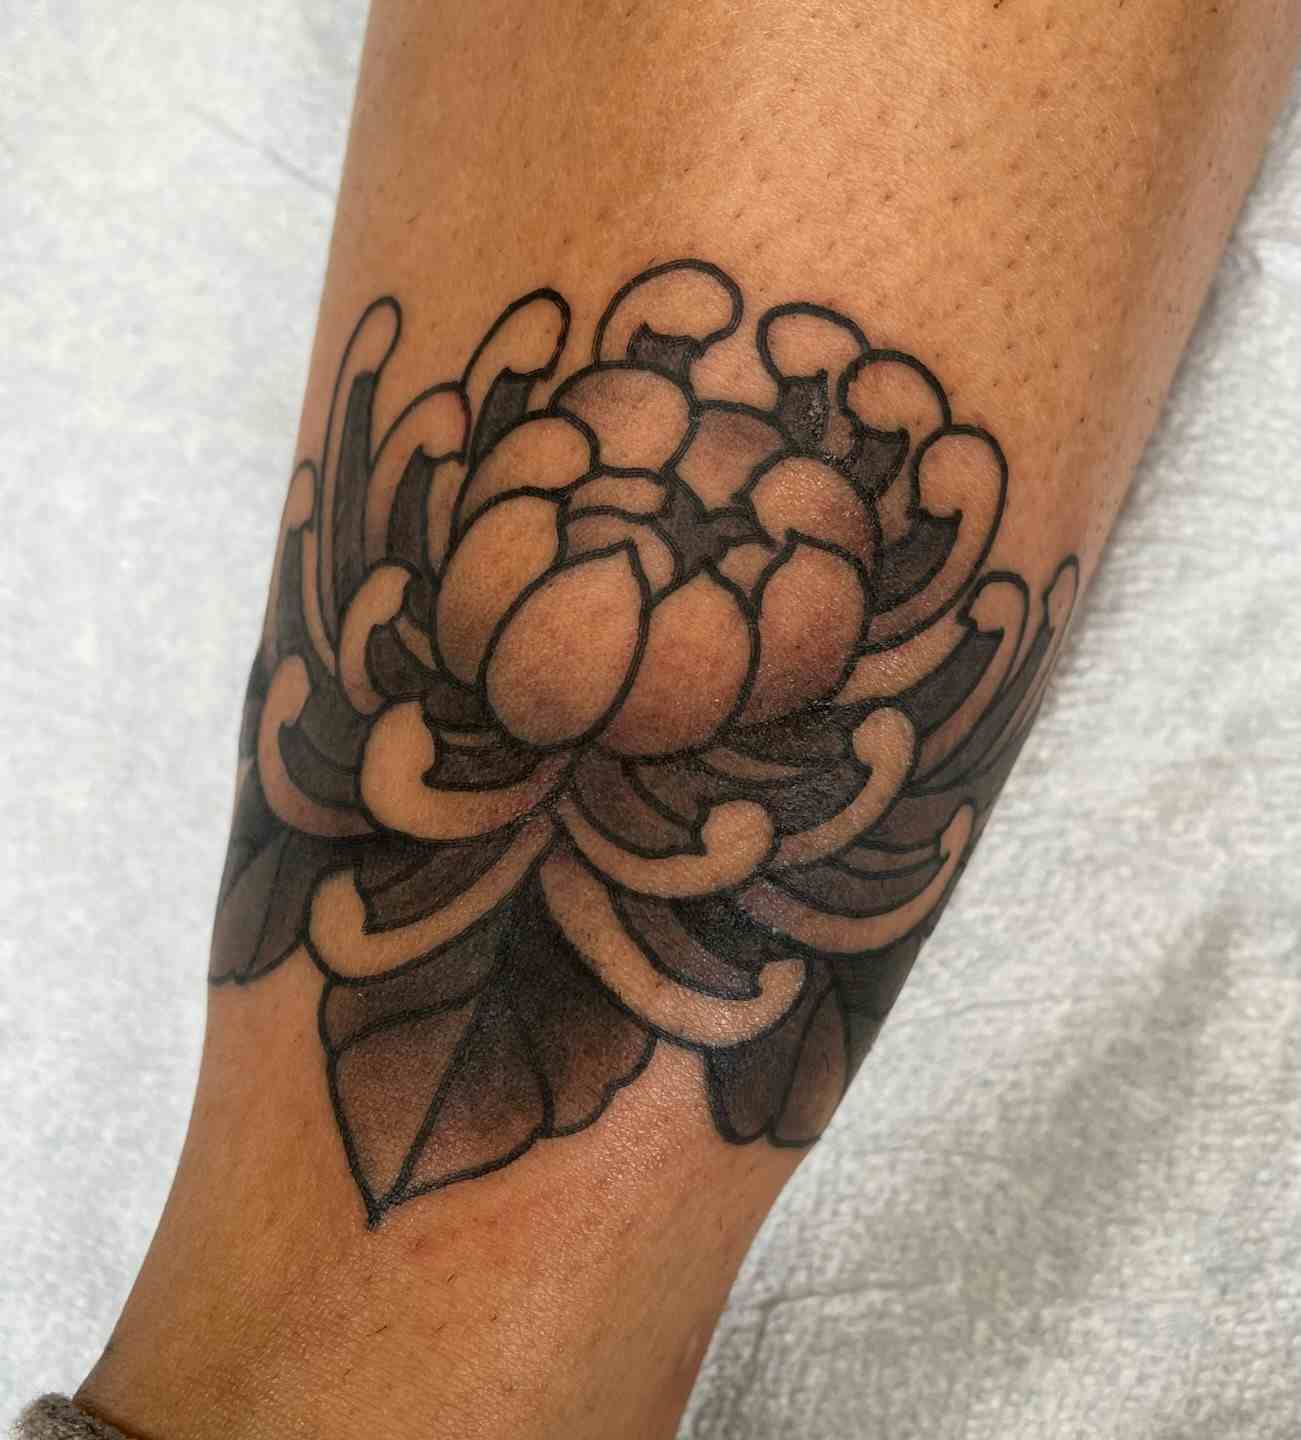 Black and grey chrysanthemum tattoo